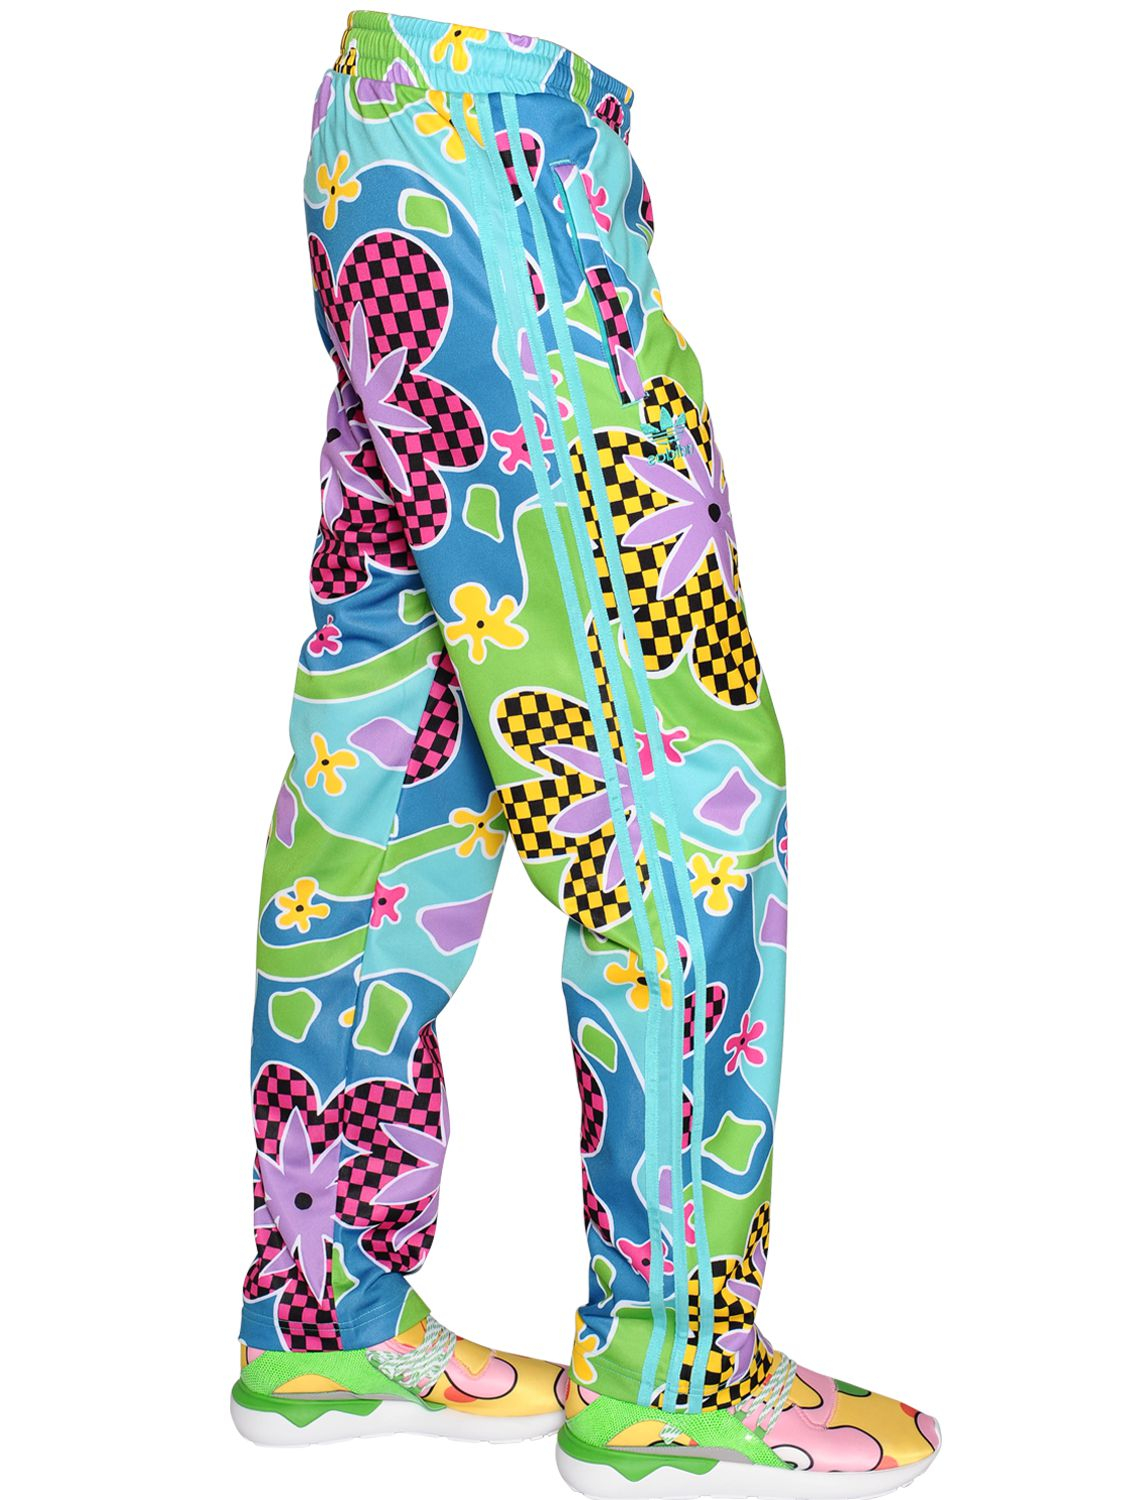 Jeremy Scott for adidas Floral Printed Jogging Pants for Men - Lyst